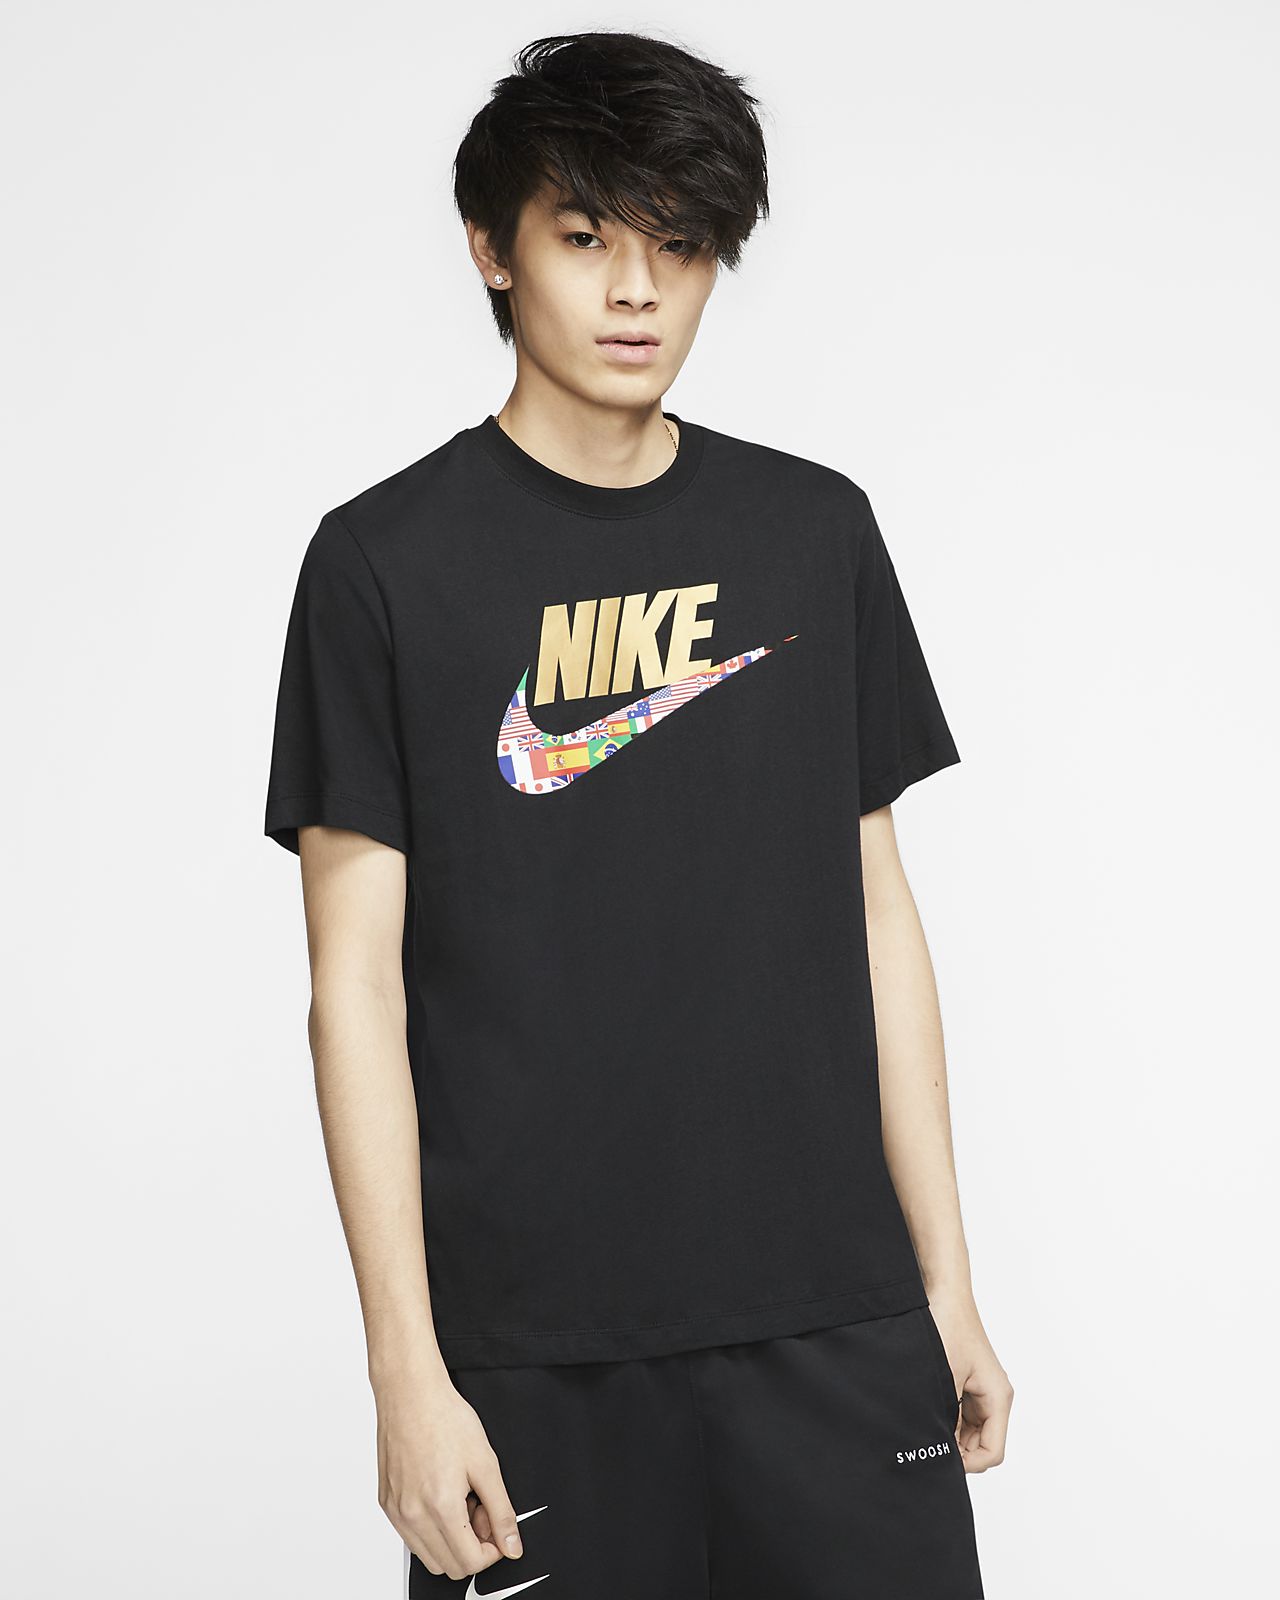 Nike Official Nike Sportswear Men S T Shirt Online Store Mail